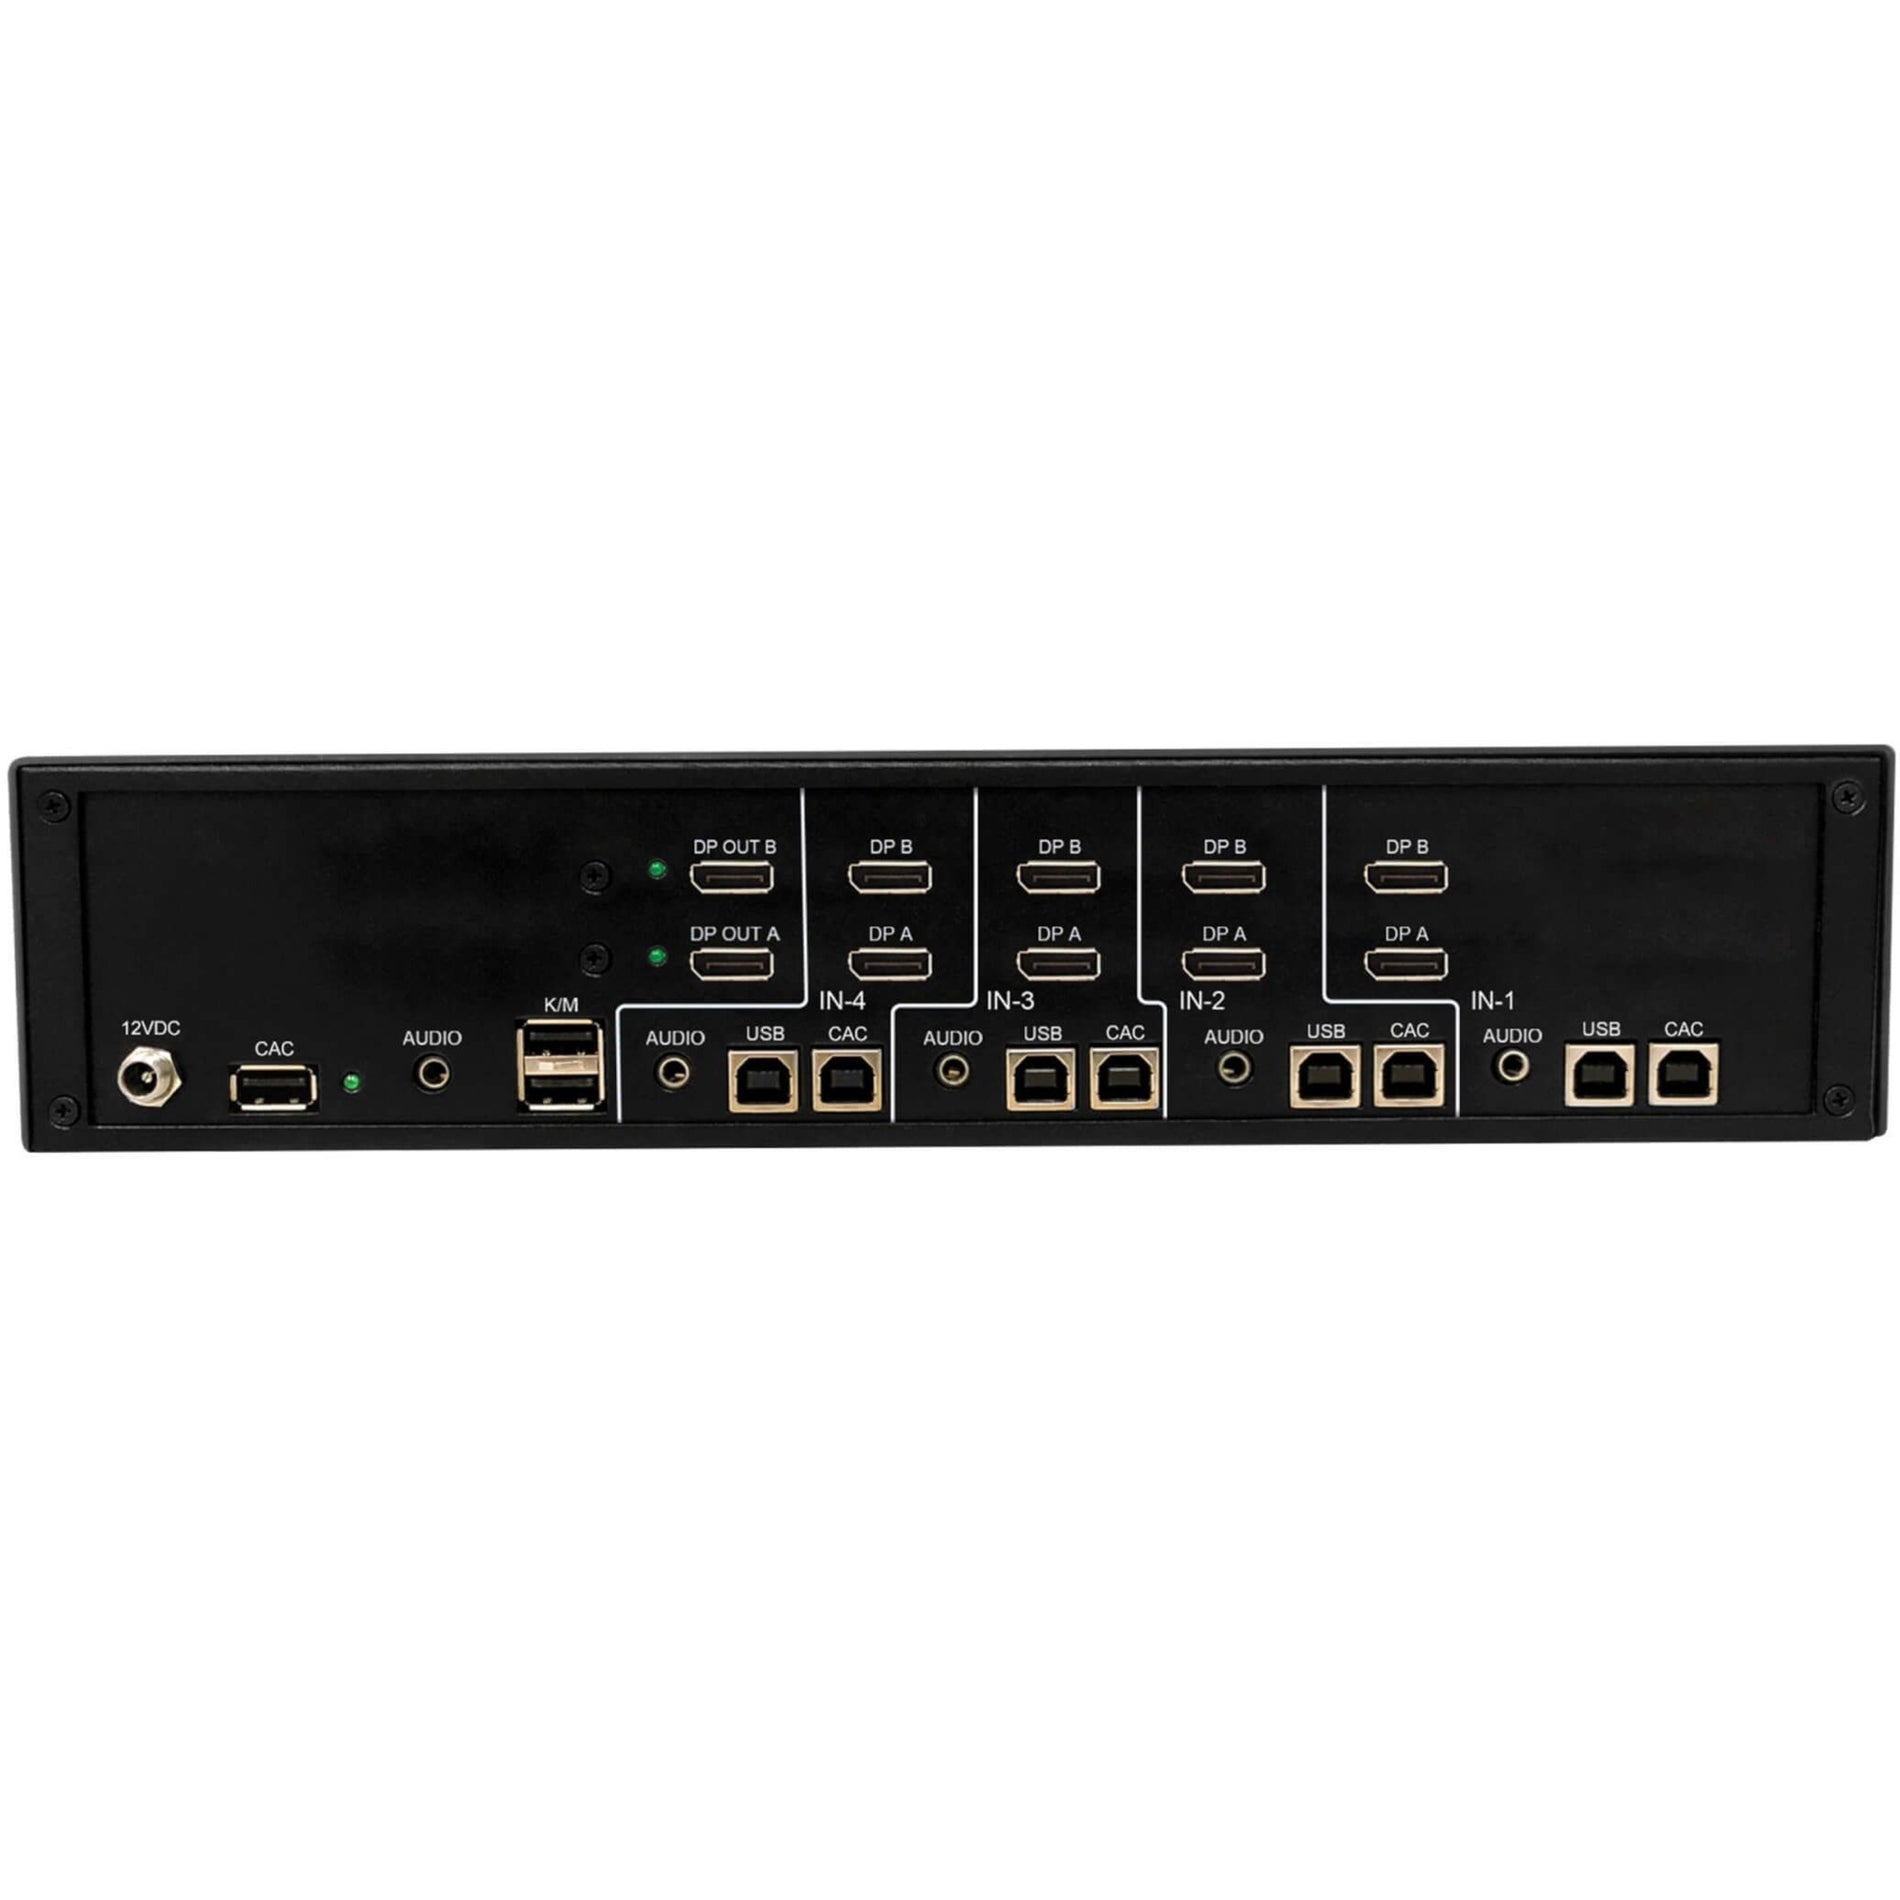 Tripp Lite B002-DP2AC4-N4 Secure 4-Port NIAP PP4.0-Certified DisplayPort KVM Switch 4K Audio CAC TAA